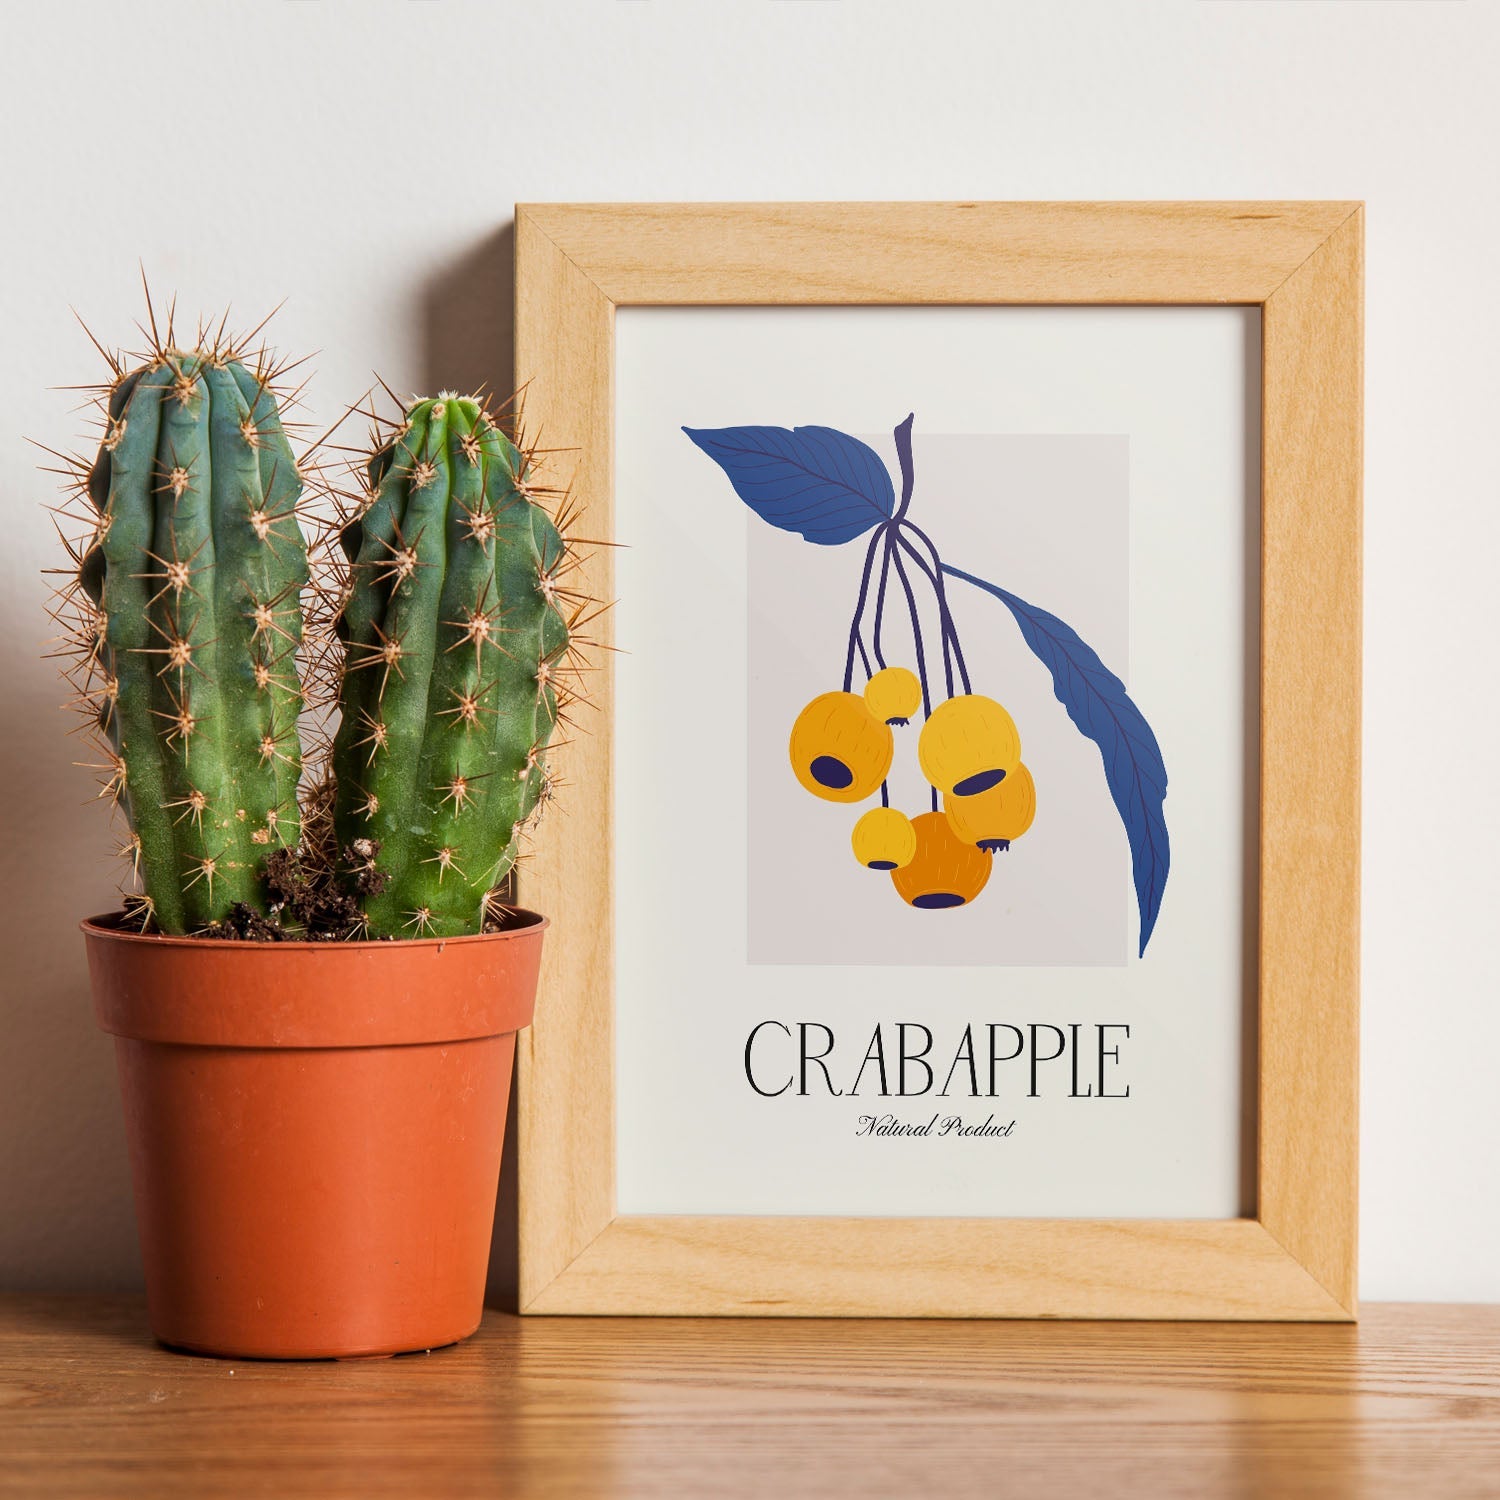 Crabapple-Artwork-Nacnic-Nacnic Estudio SL